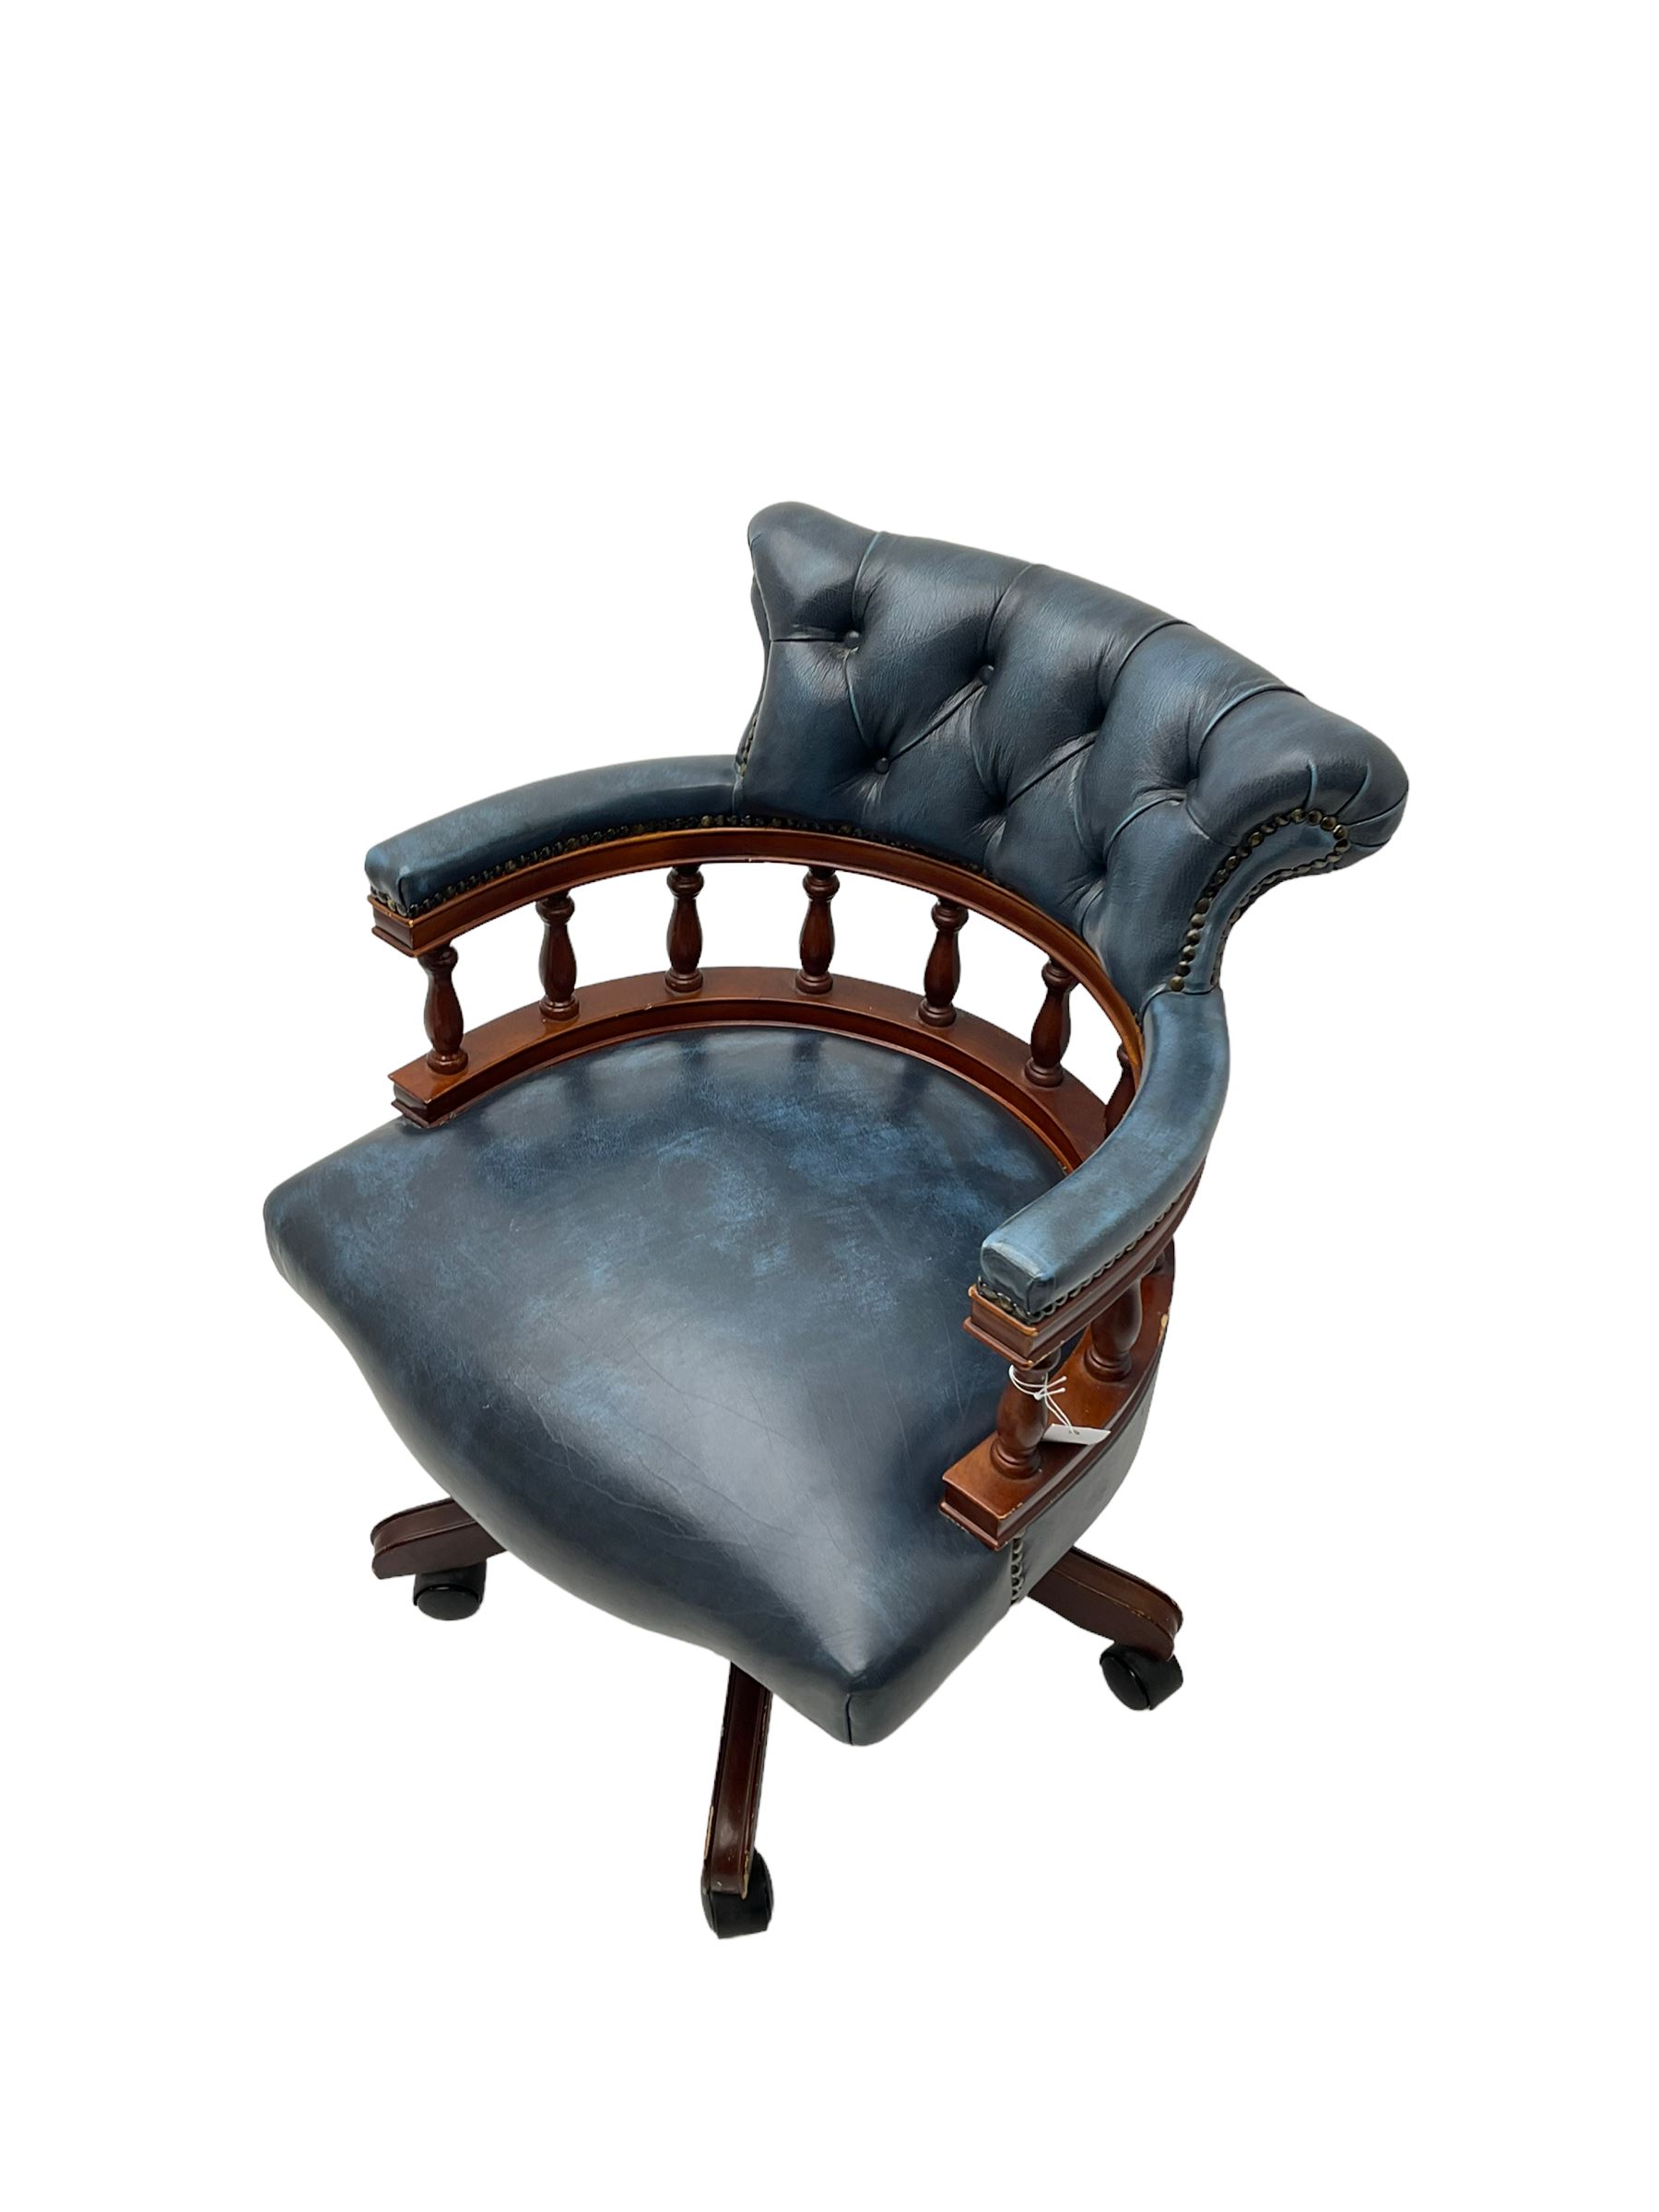 Captains swivel desk chair - Image 4 of 6